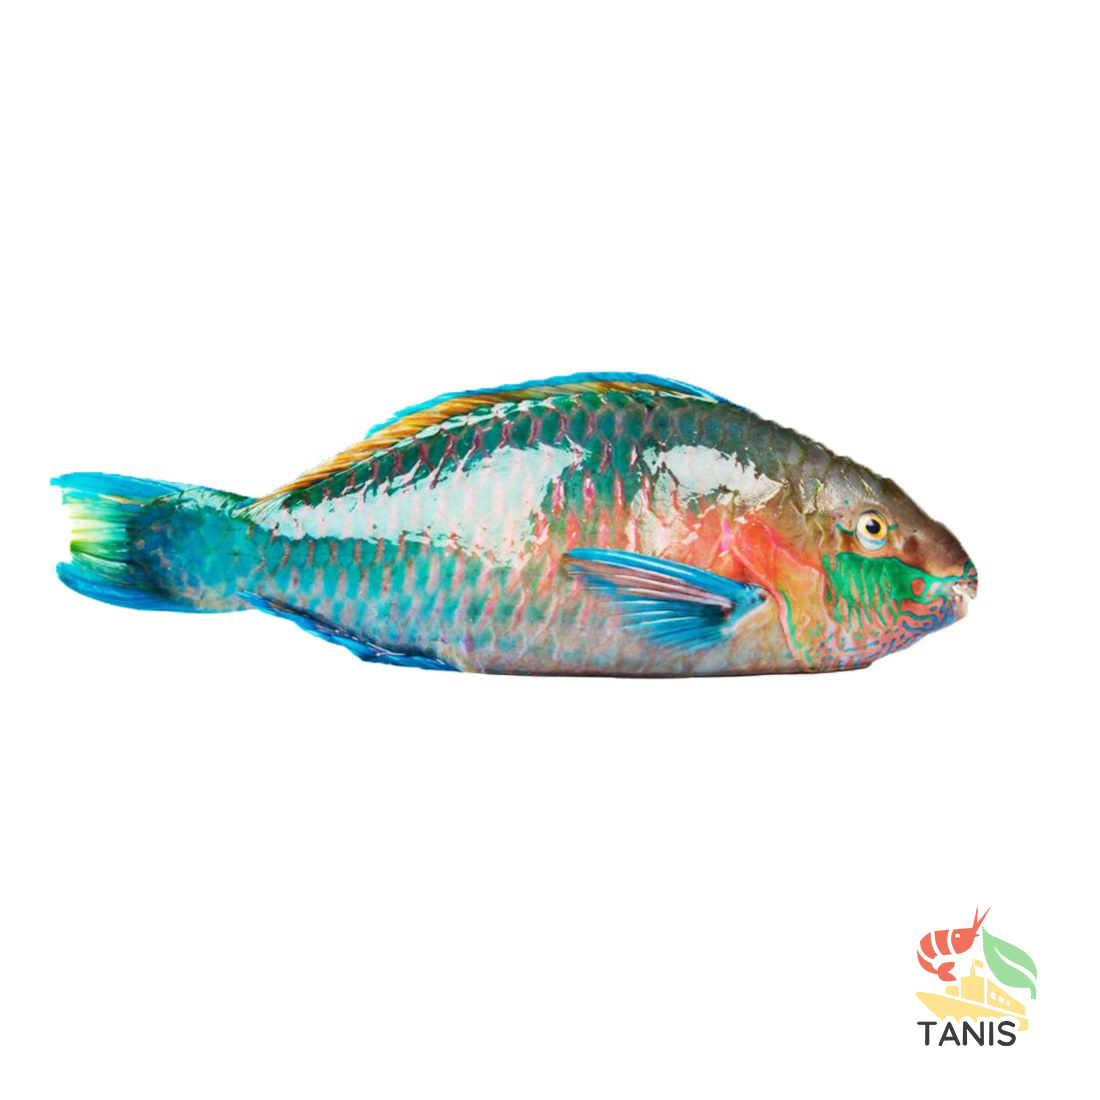 parrot-fish